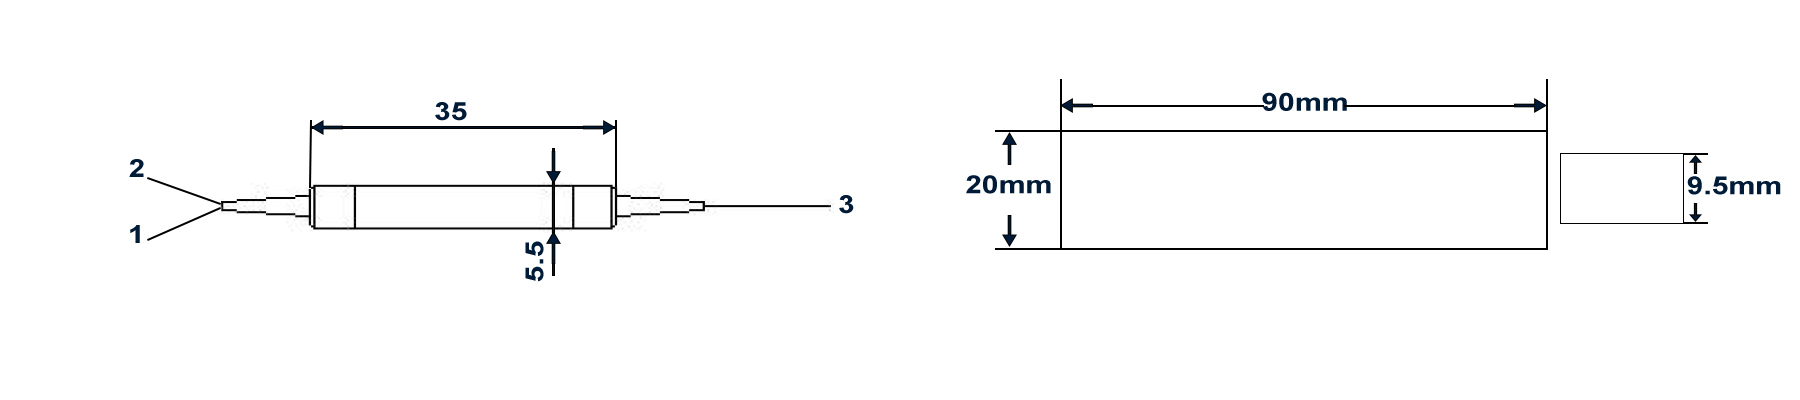 Polarization Beam Combiner/Splitter Drawing